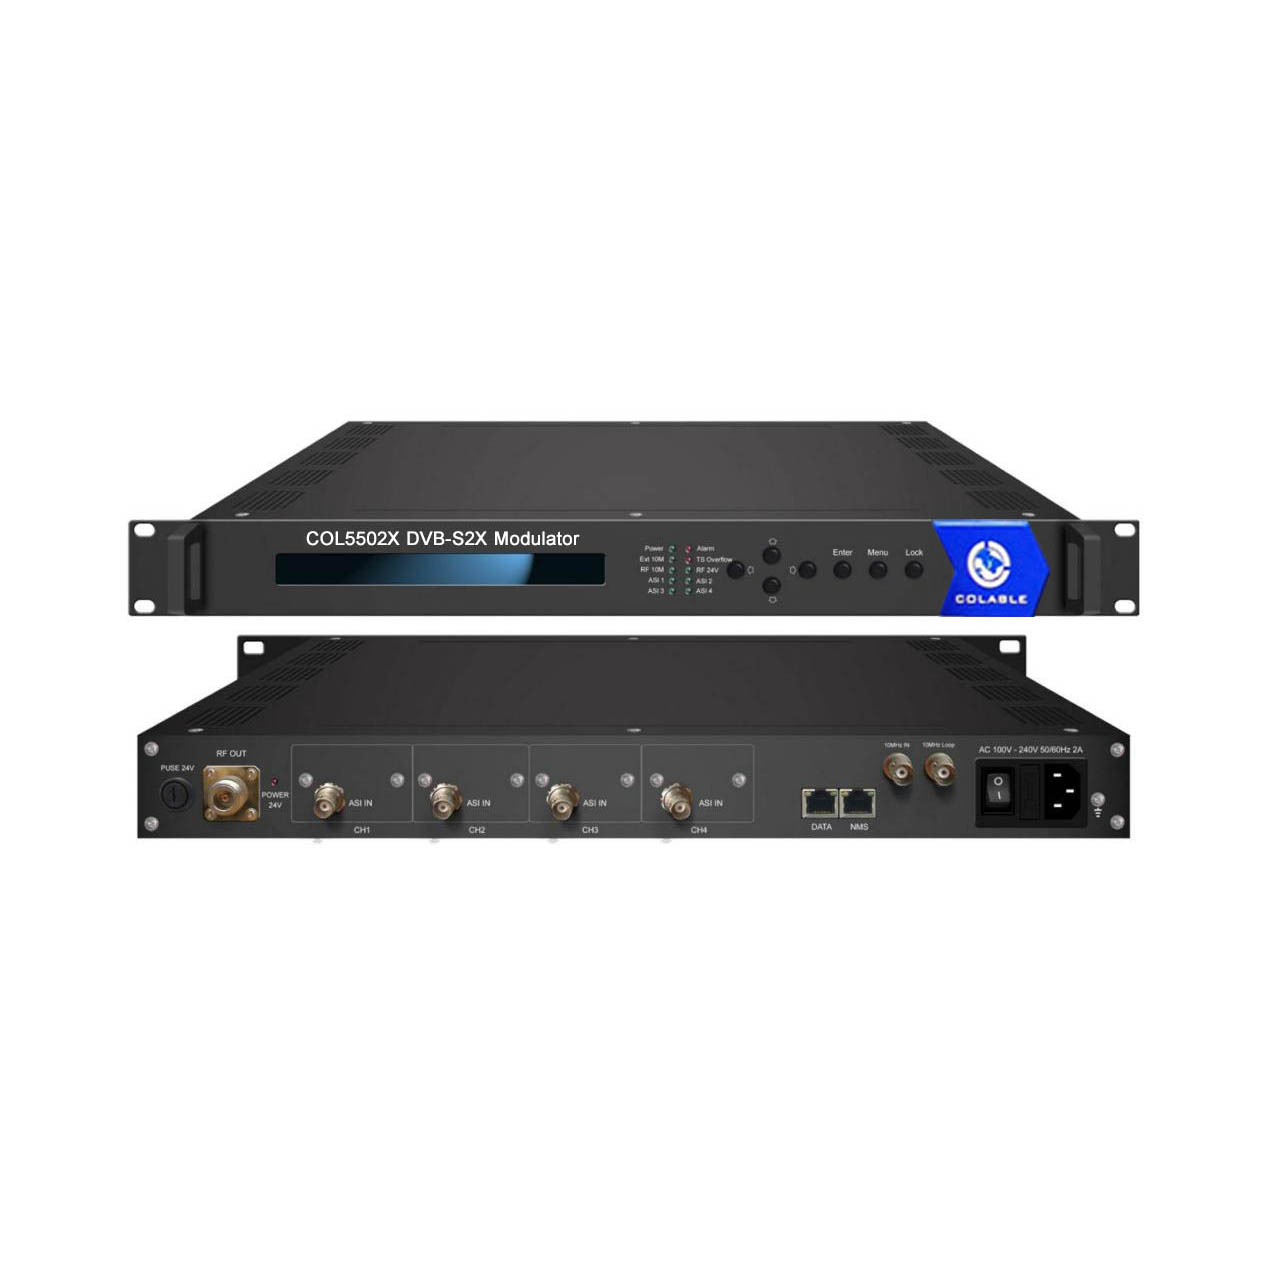 QPSK 8PSK APSK DVB-S/S2X Modulator COL5502X